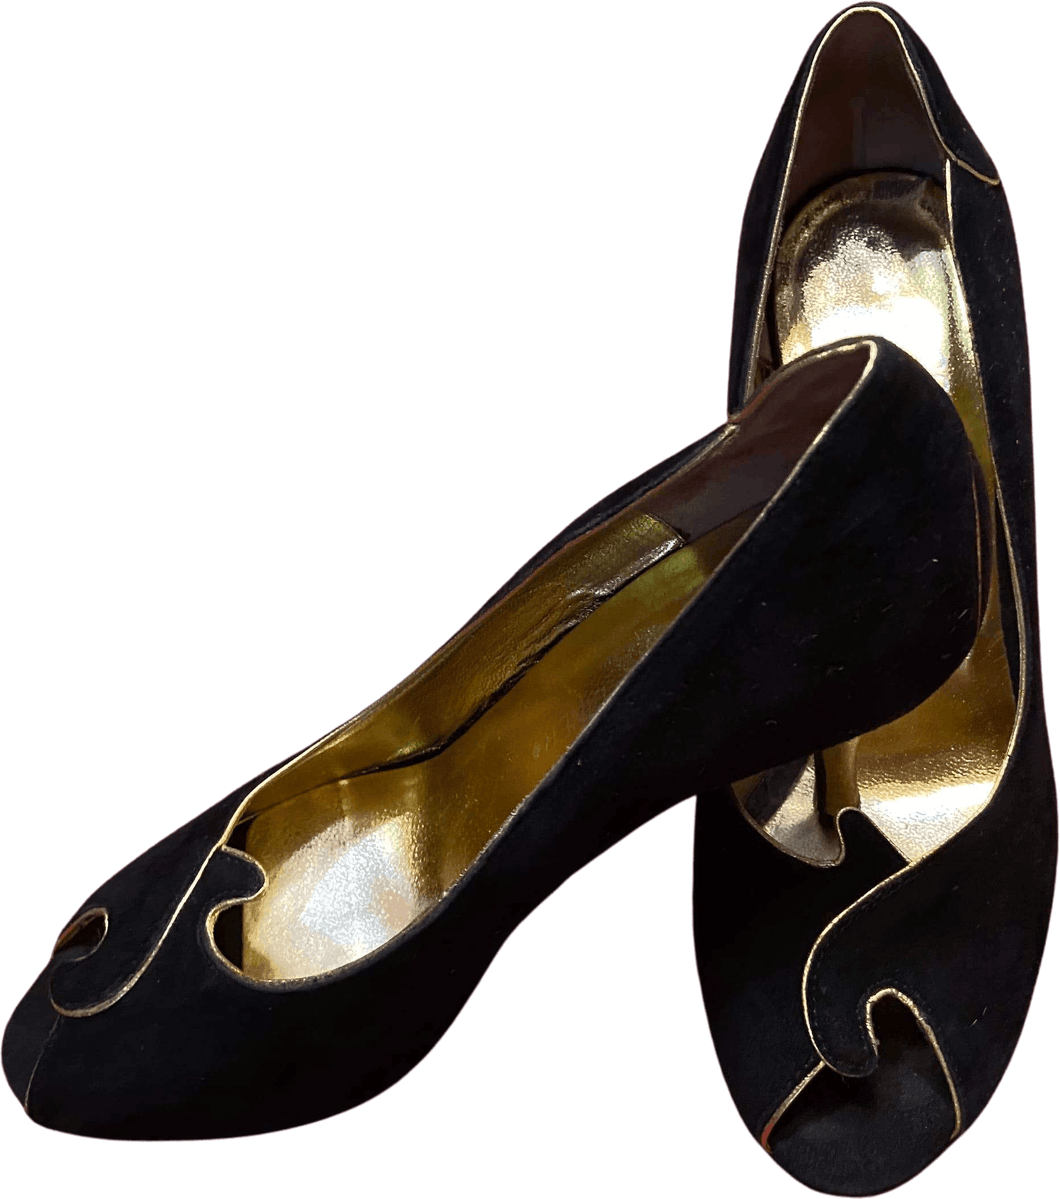 80’s Dressy Suede Black W/ Gold Trim Pumps by Donald Pliner Couture